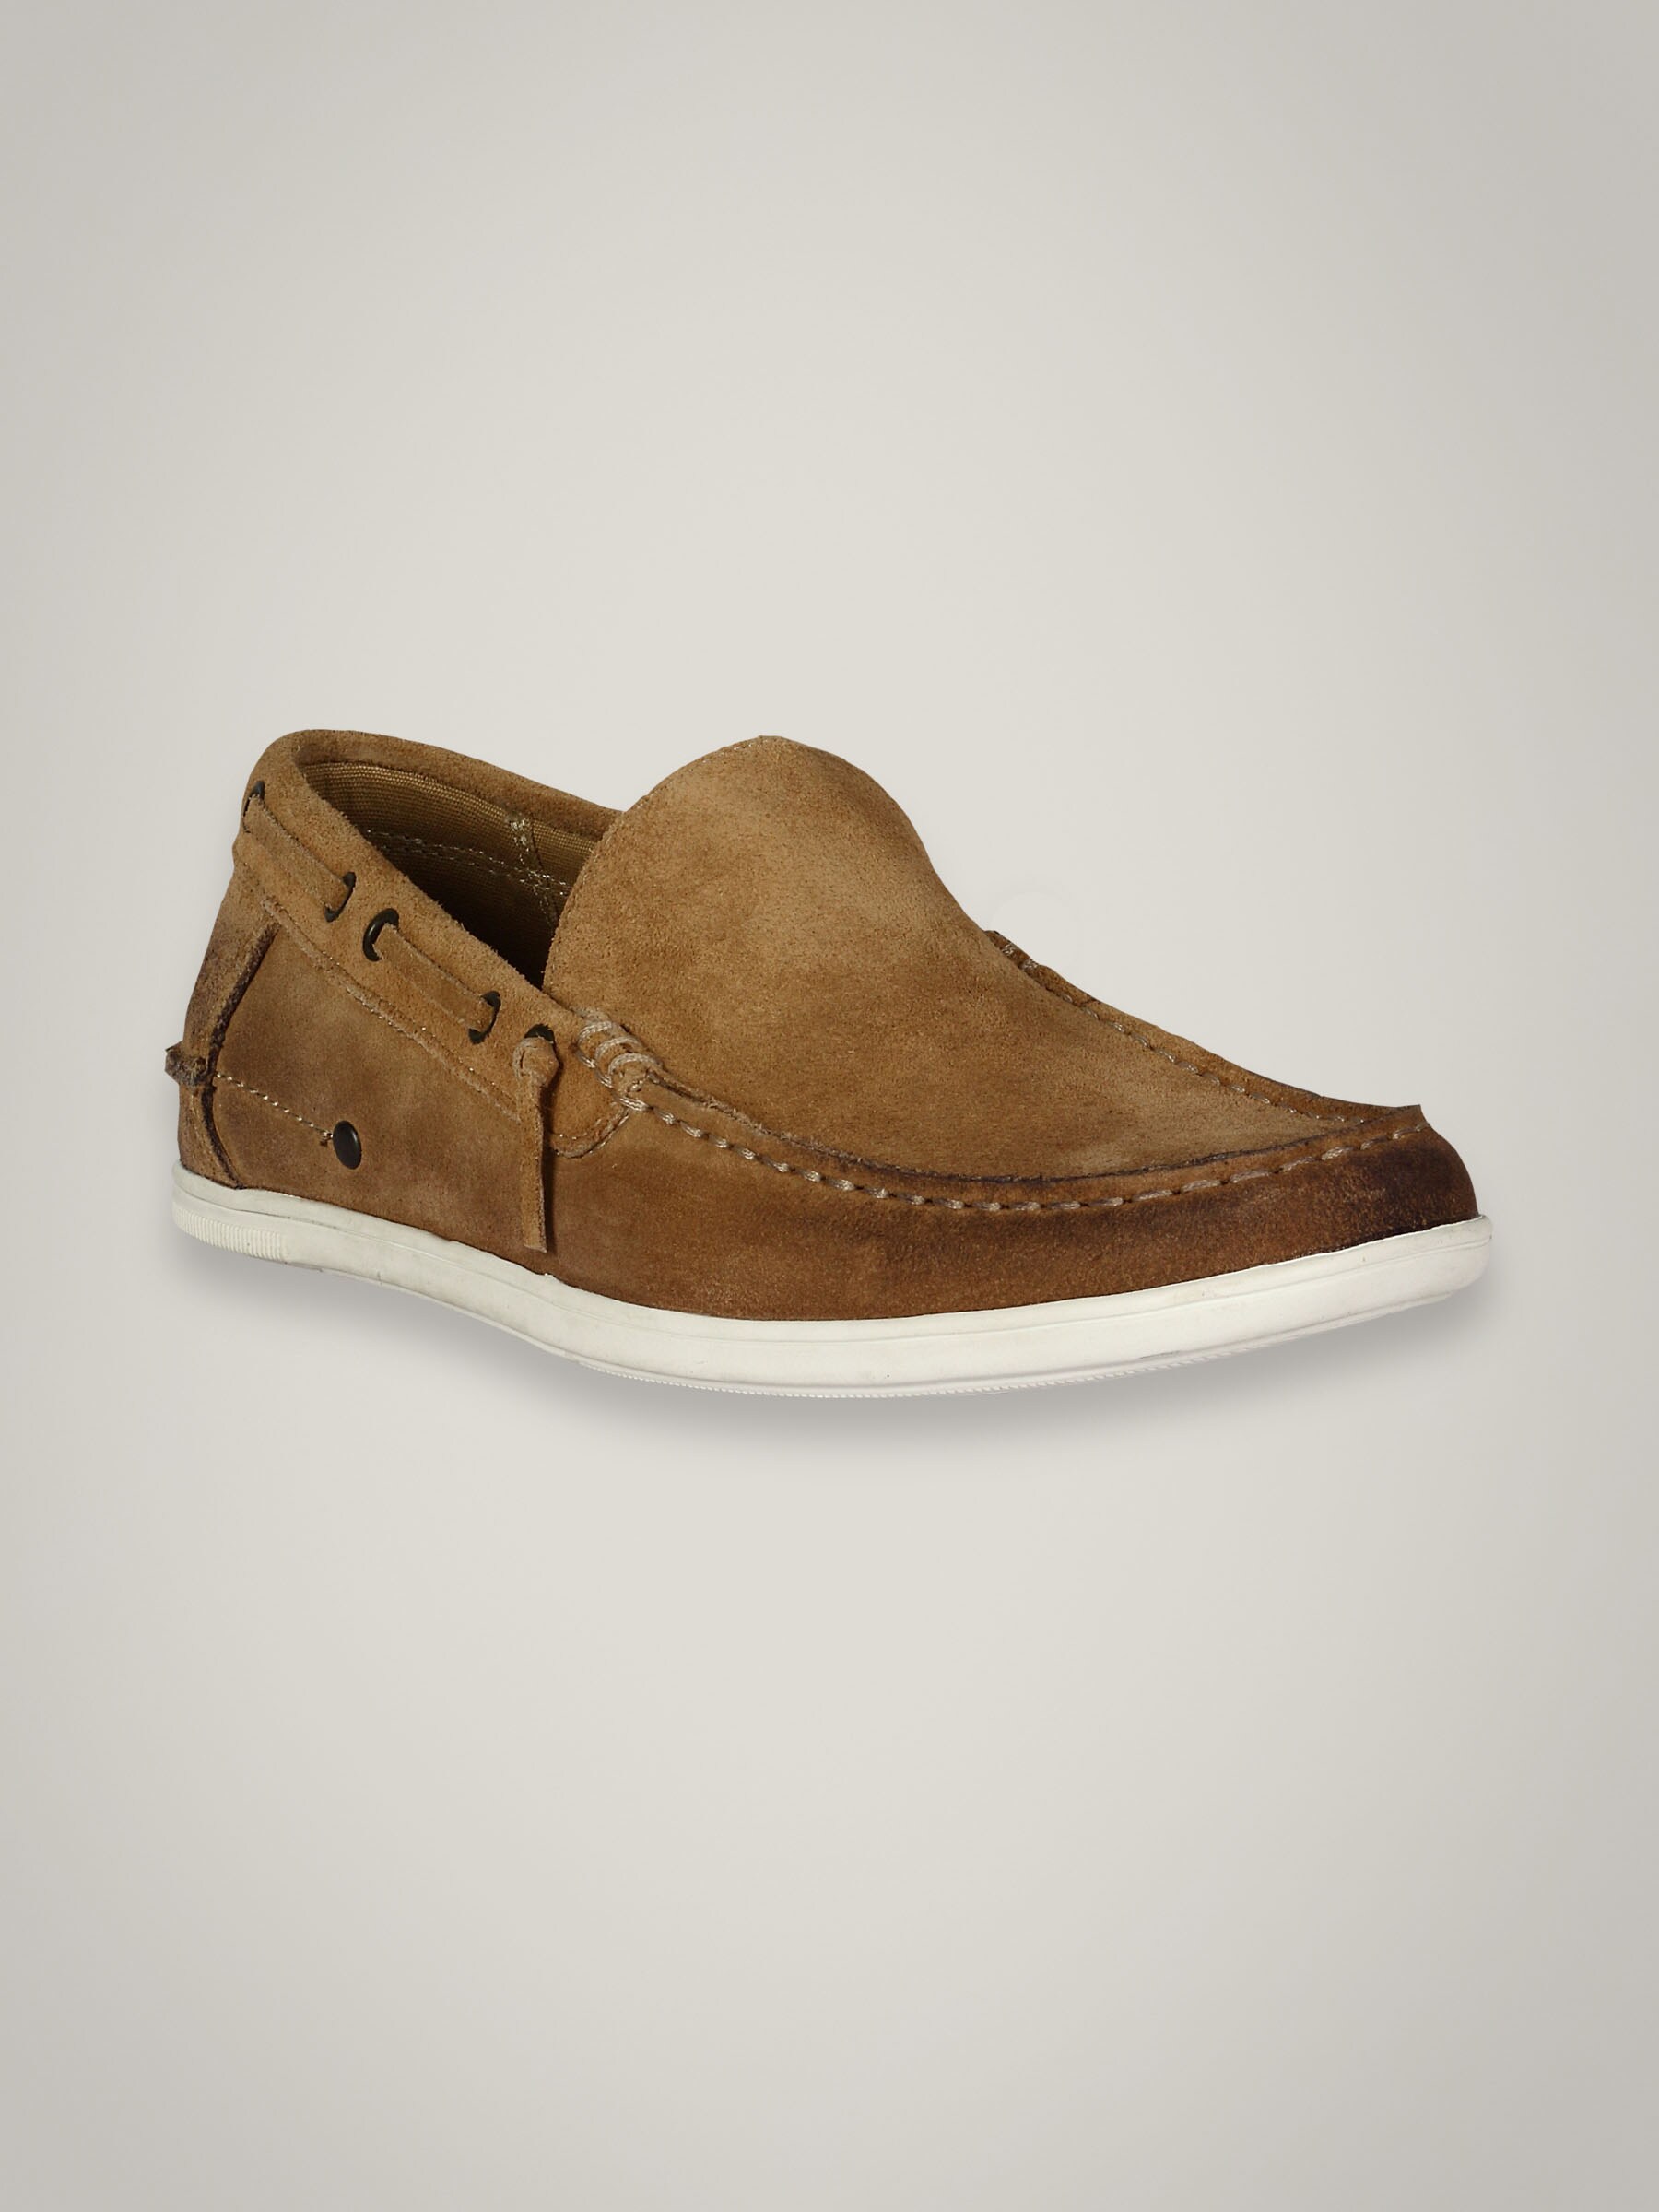 Skechers Men's Light Brown Lifestyle Shoe